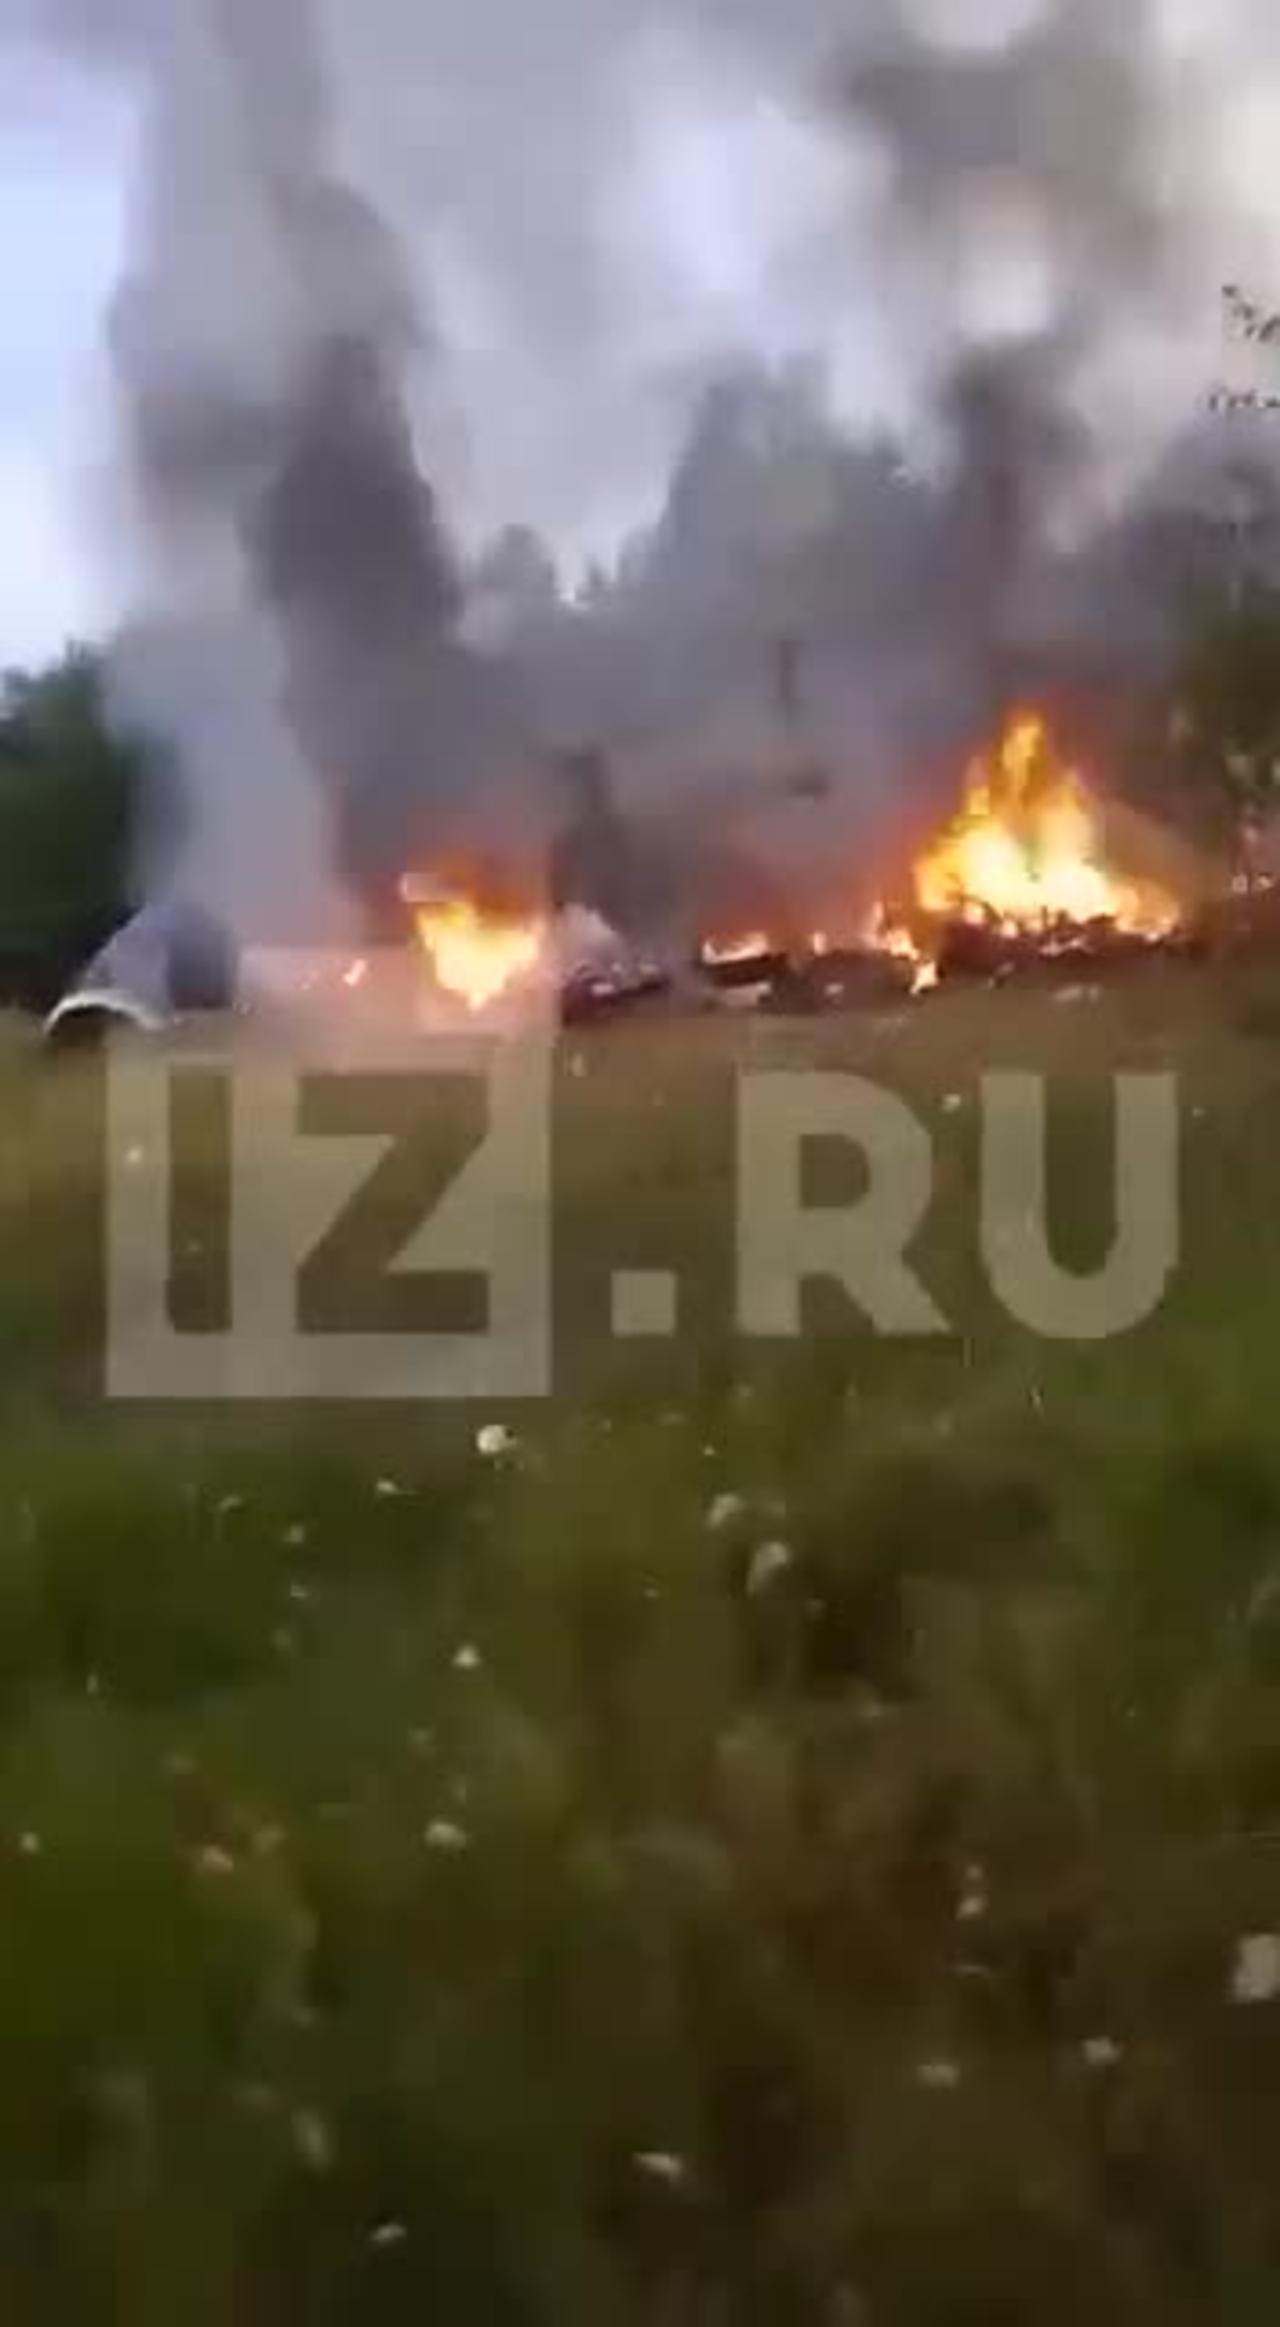 Wagner Leader Yevgeny Prigozhin shot down plane - One News Page VIDEO